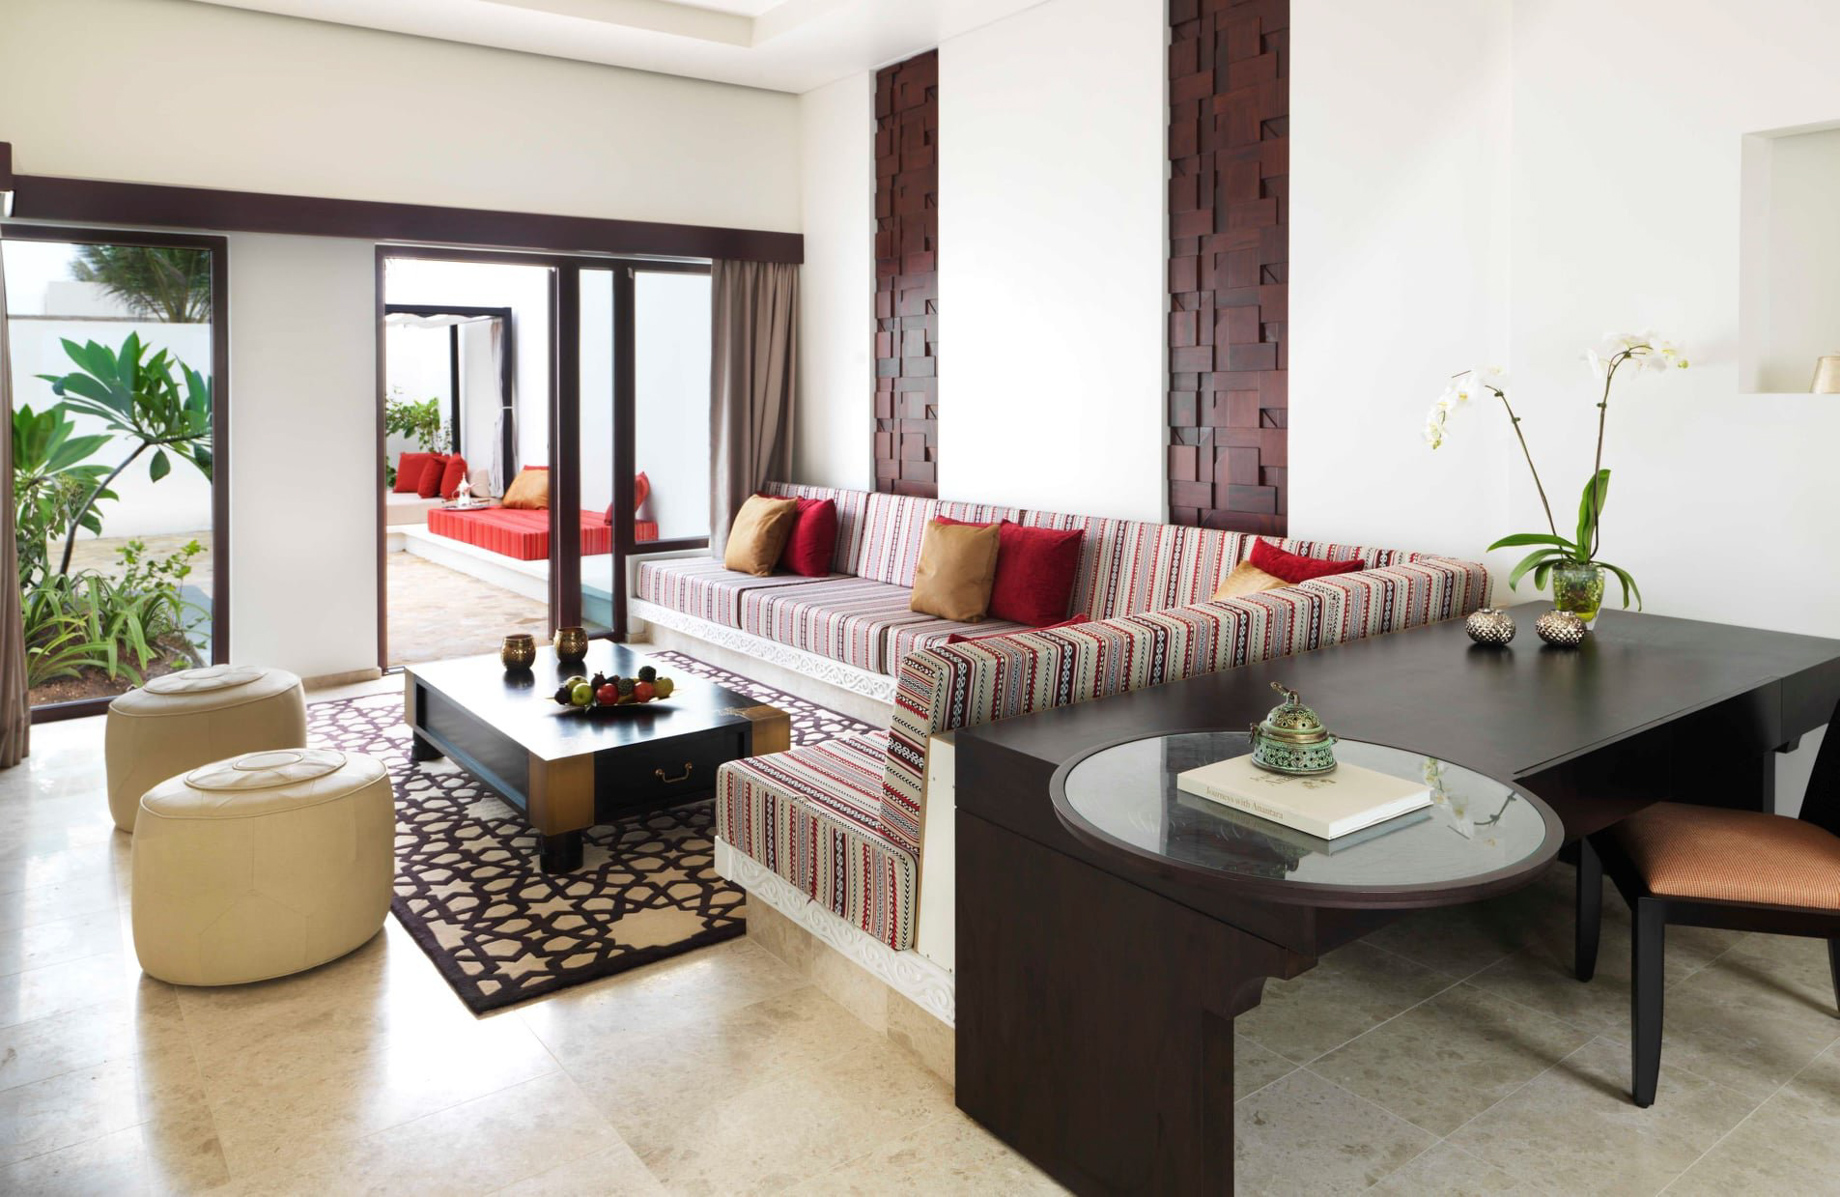 Al Baleed Resort Salalah by Anantara – Oman – One Bedroom Garden View Villa